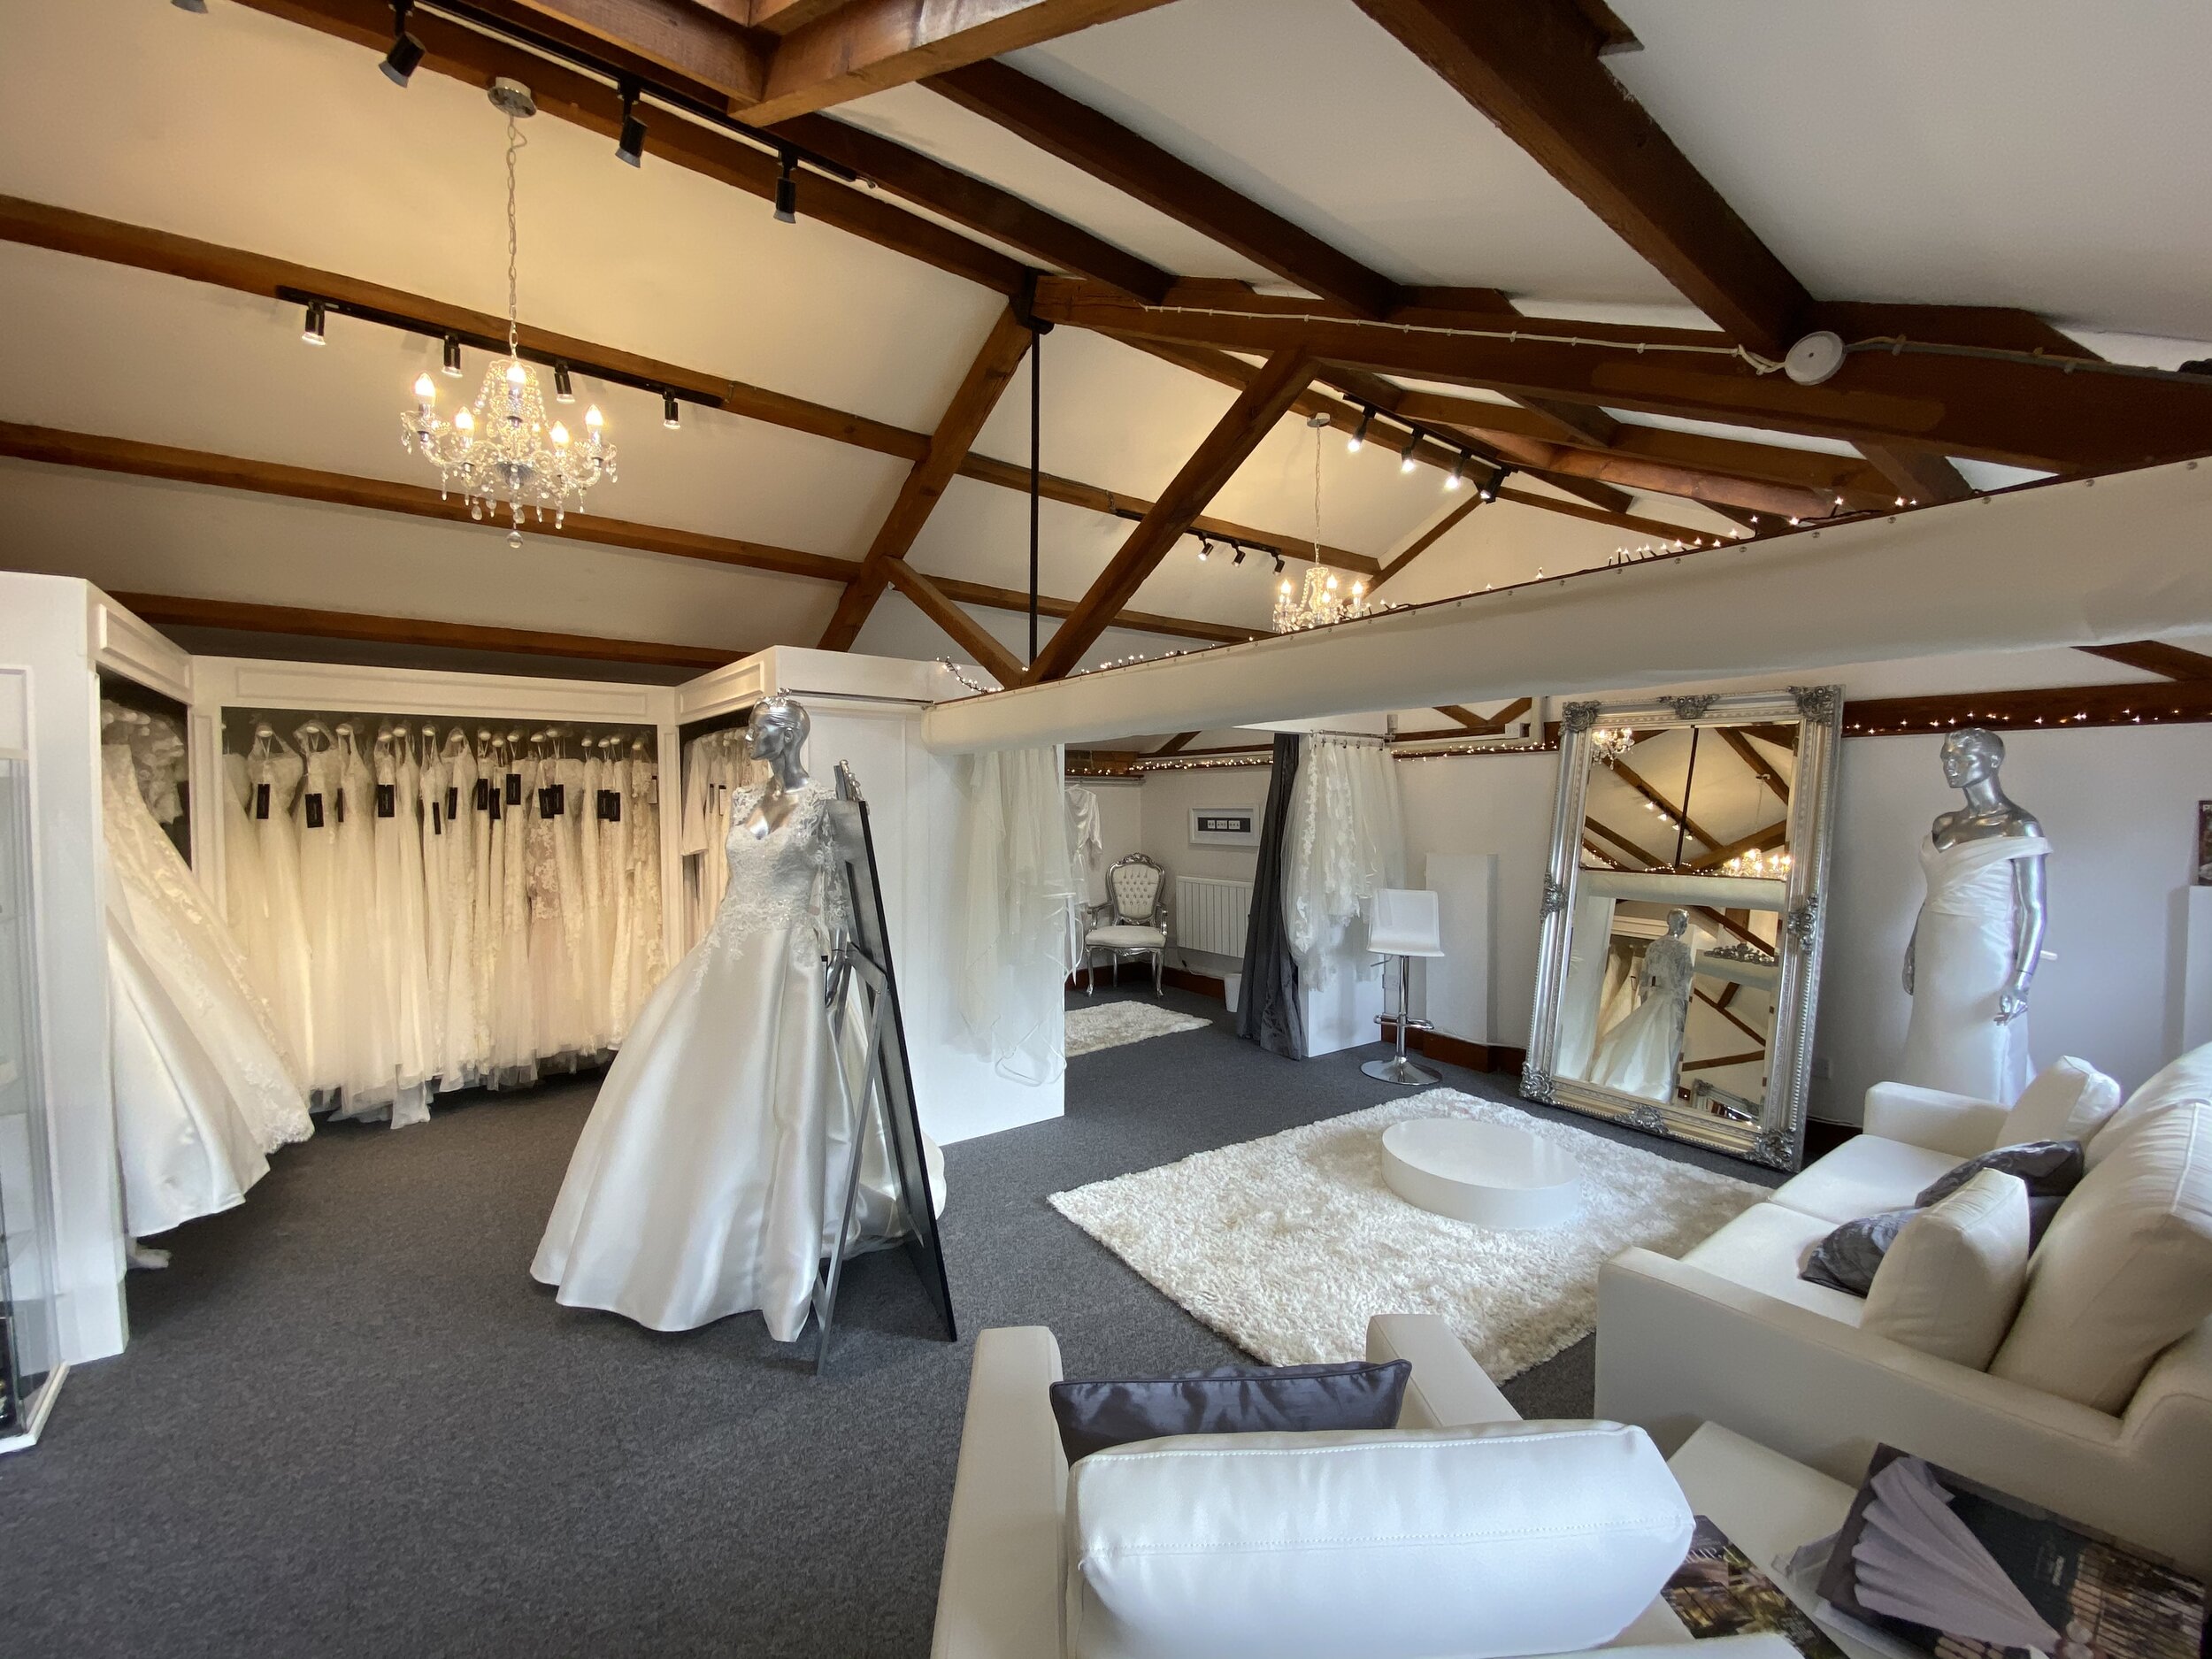 Berkeley Bridal Wedding dress shop - Interior 3.jpg